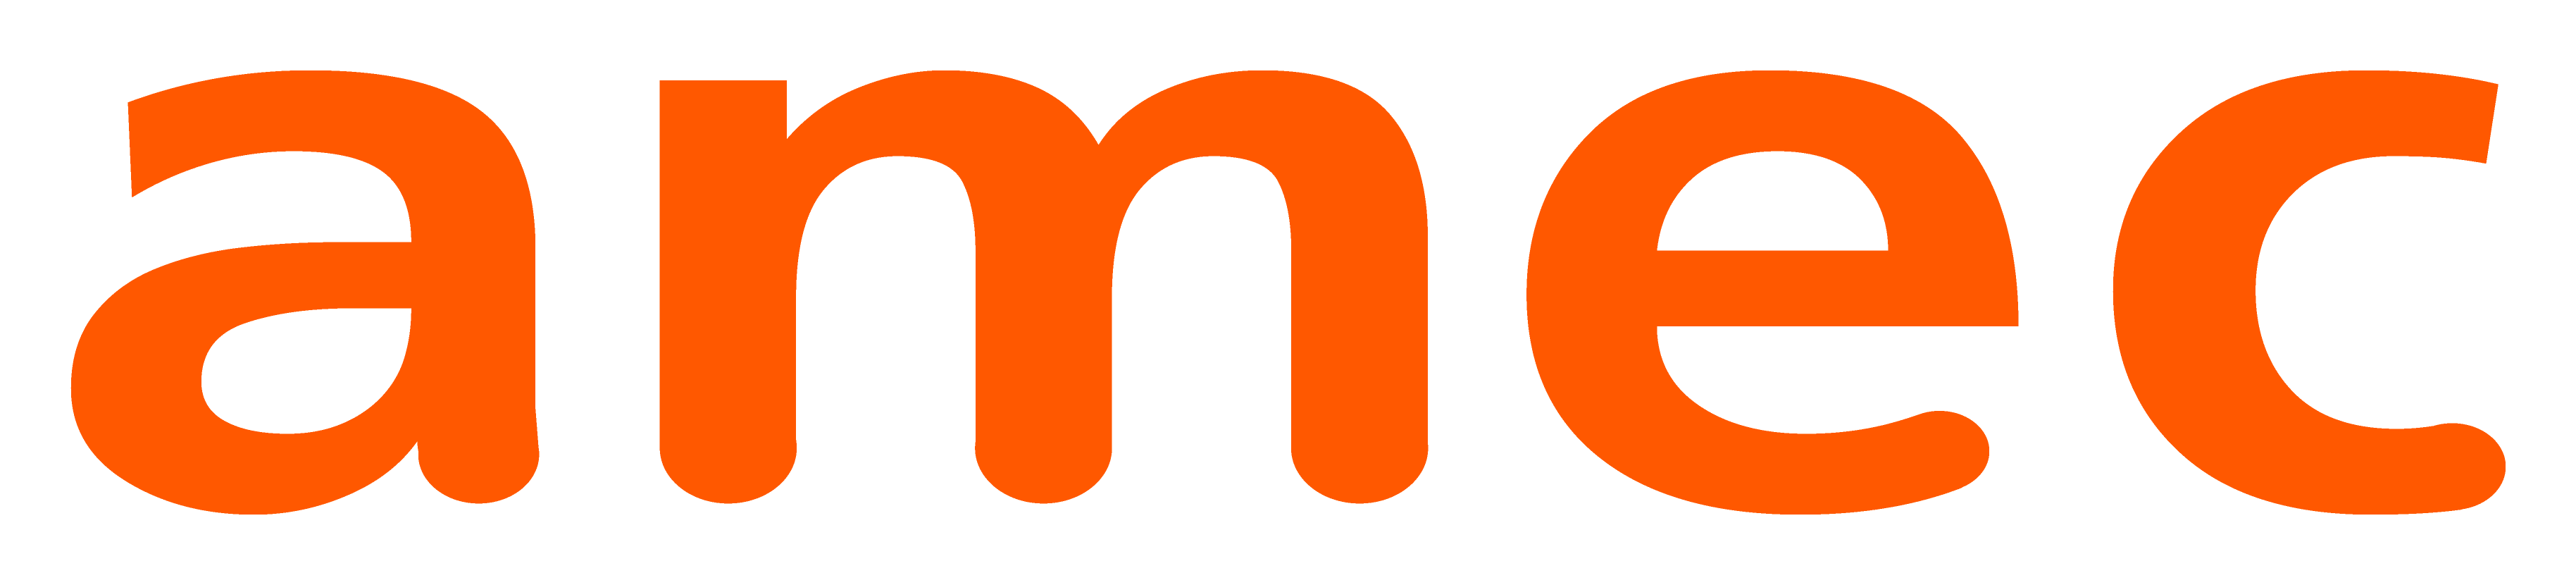 Amec Logo